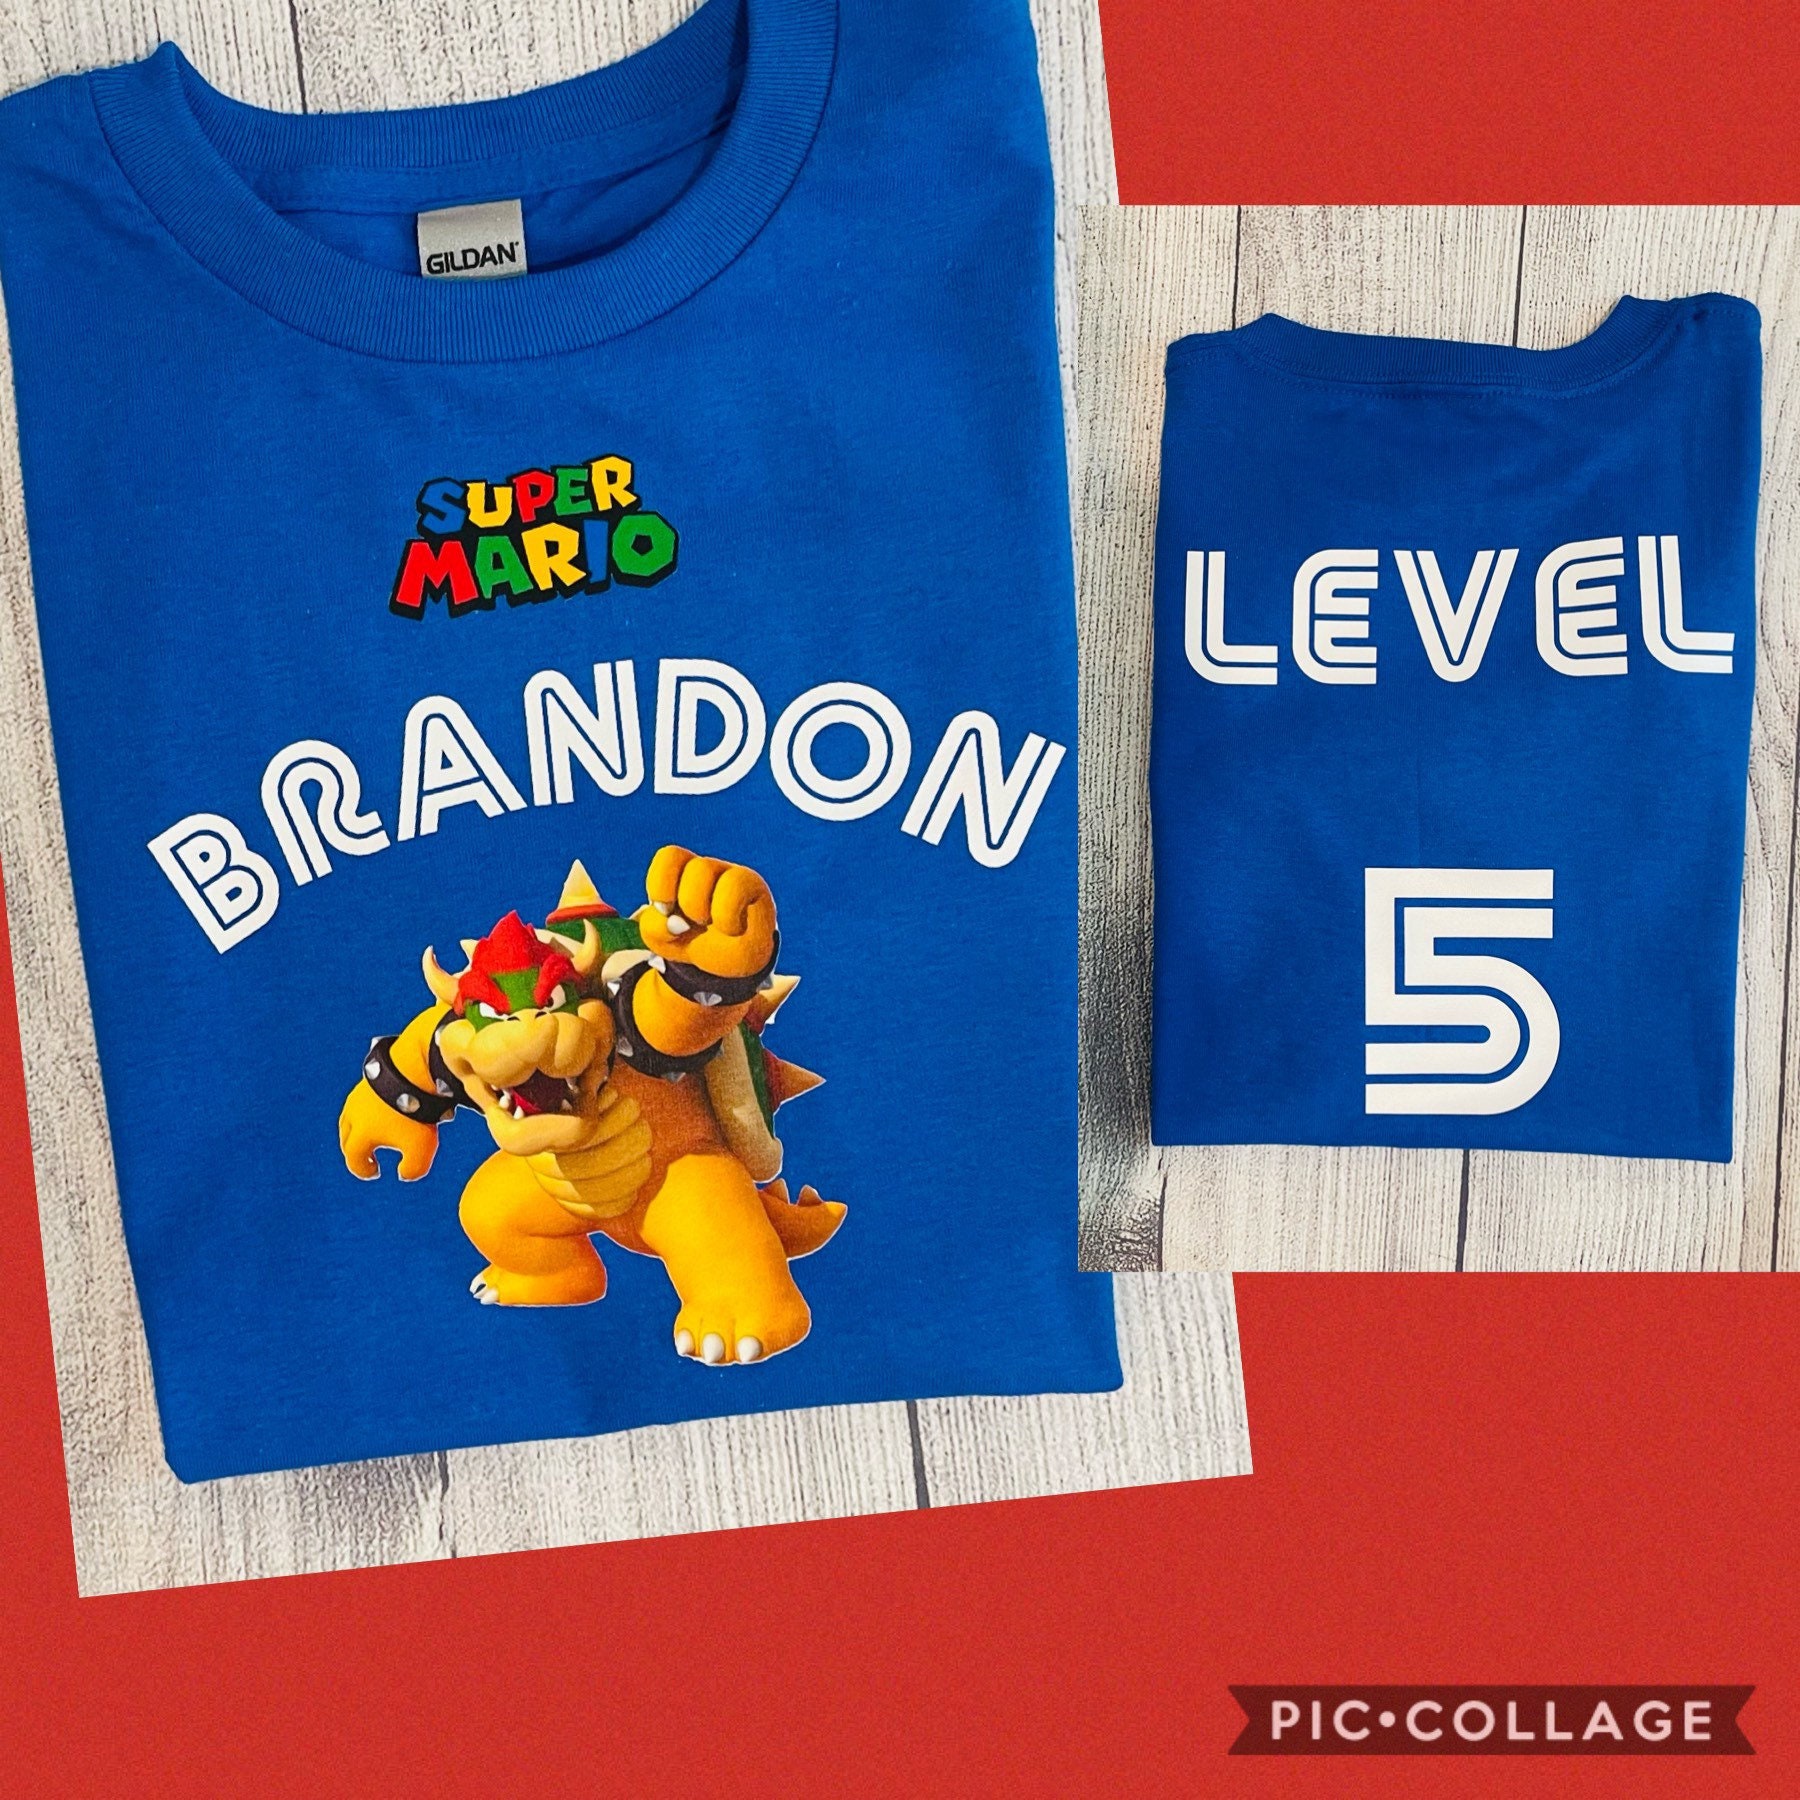 Boy's Nintendo Bowser Jr. Costume T-shirt : Target